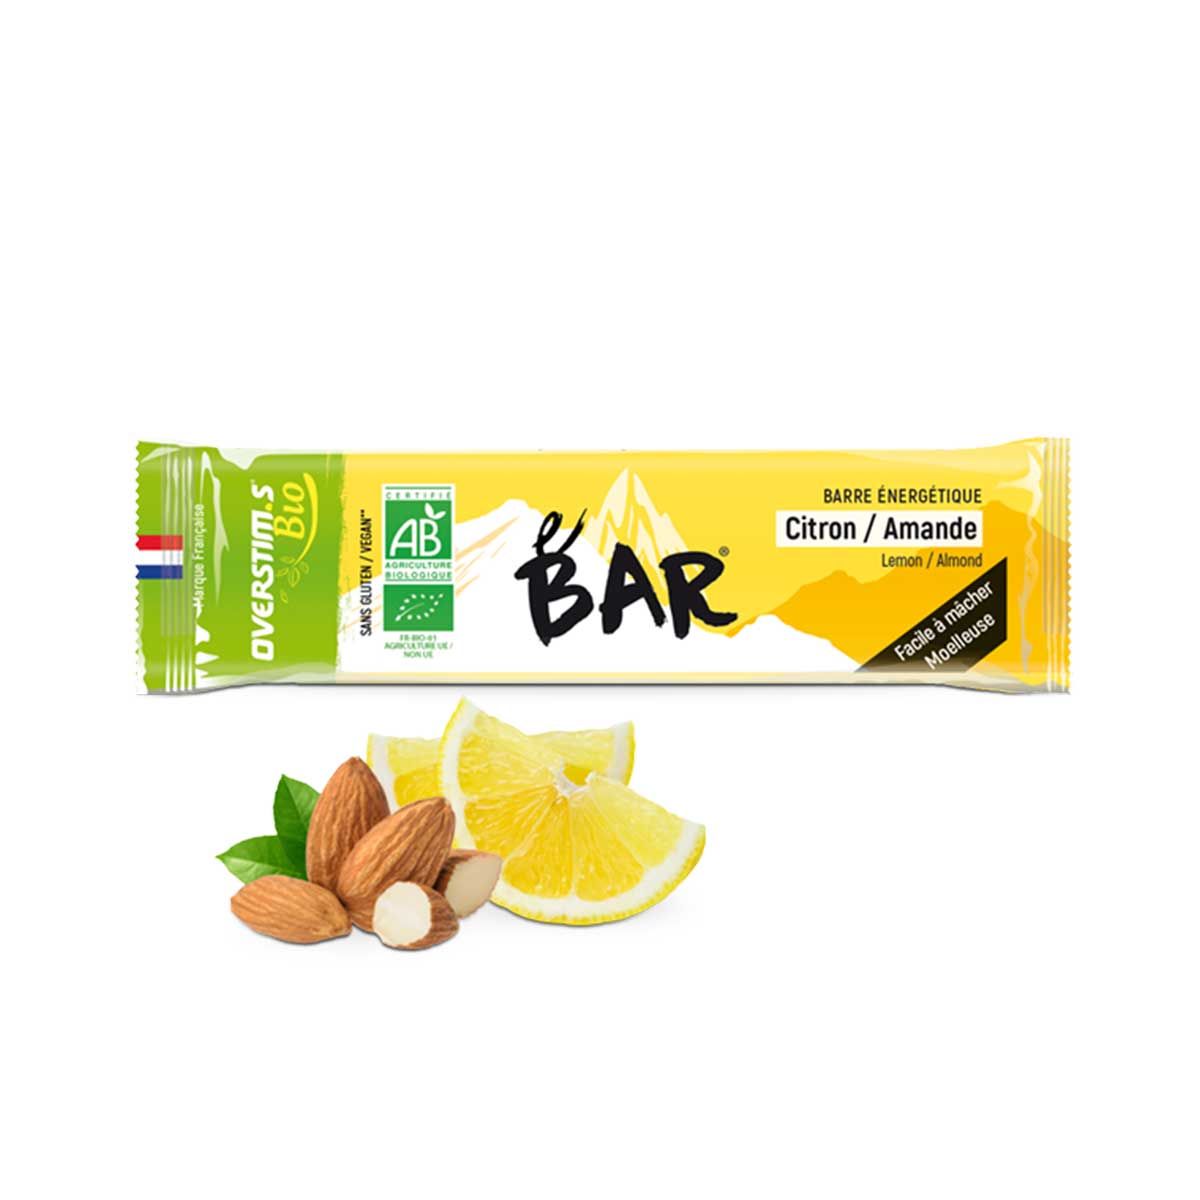 Overstim.s organic e-bar - Lemon, almonds